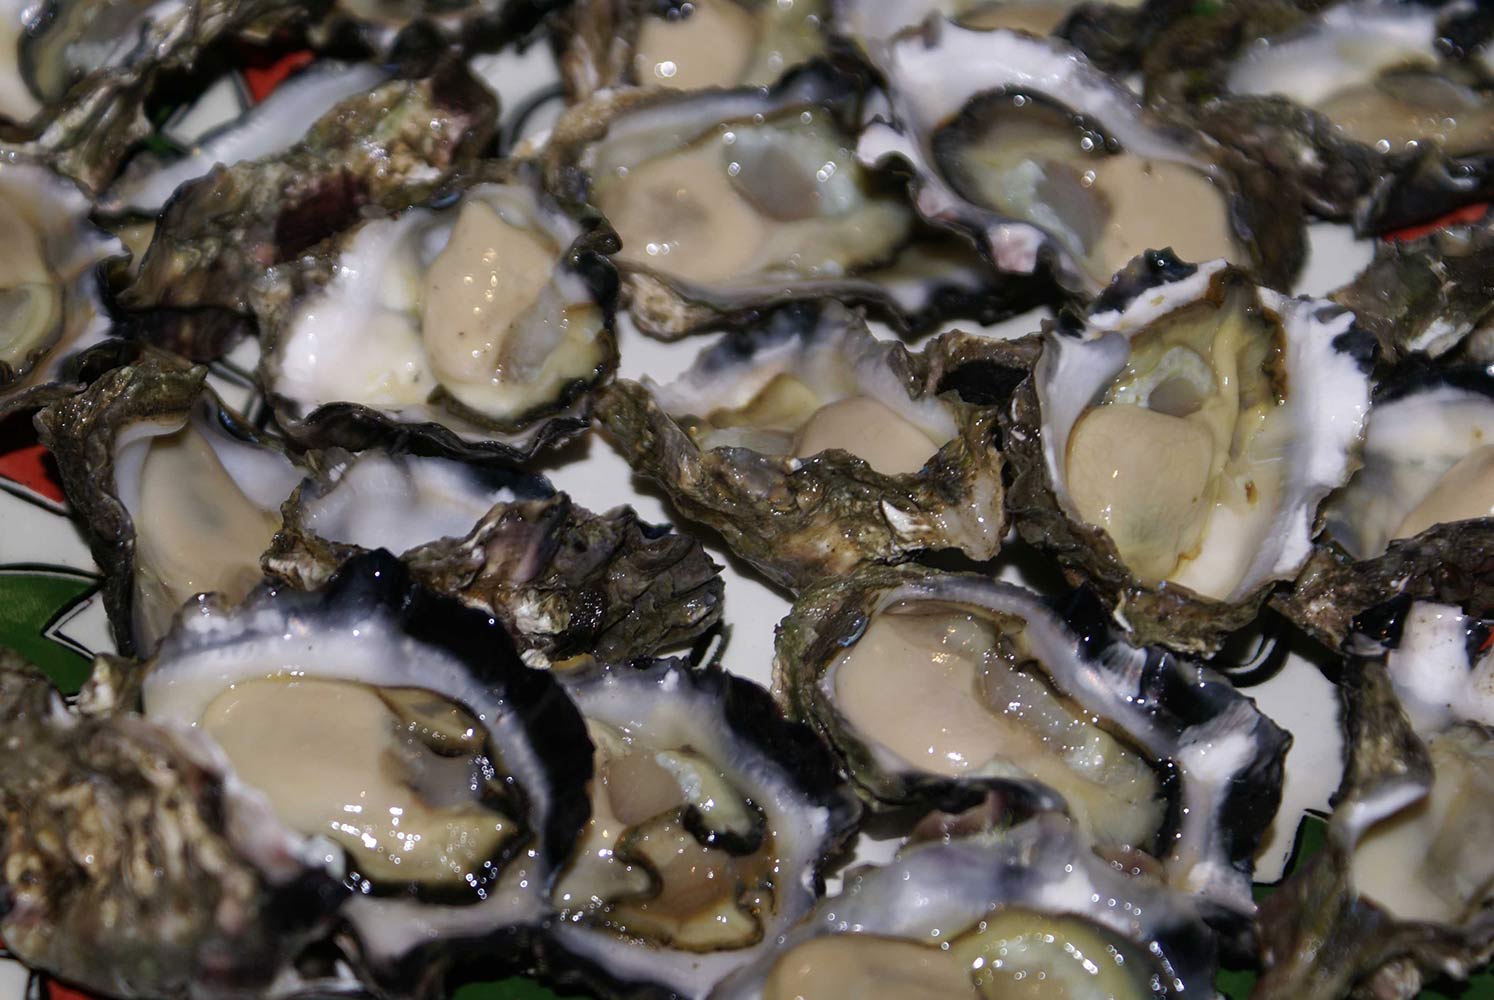 Sydney Rock oysters